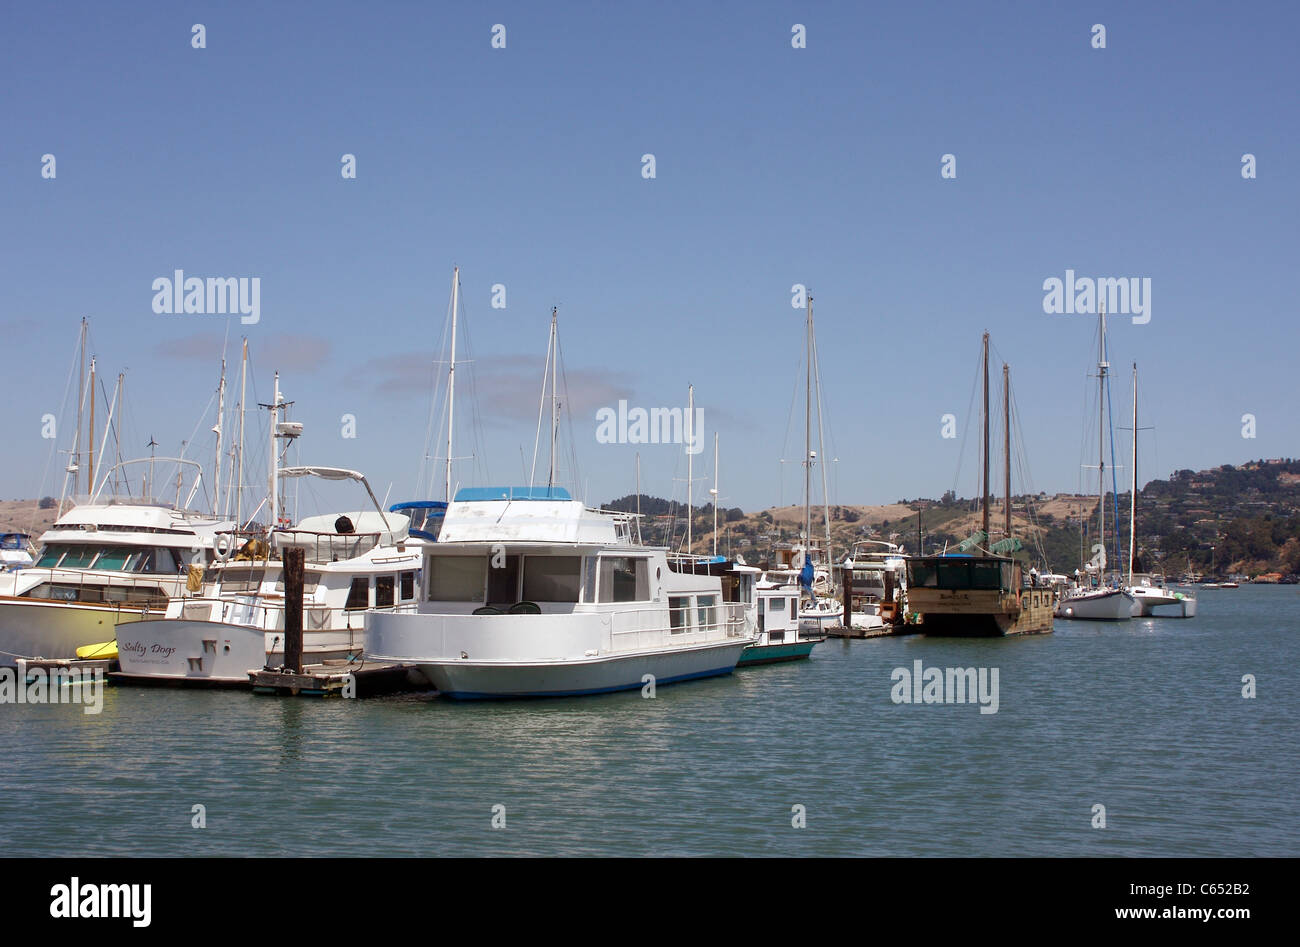 Boats moored in a marina in Sausalito, California Stock Photo